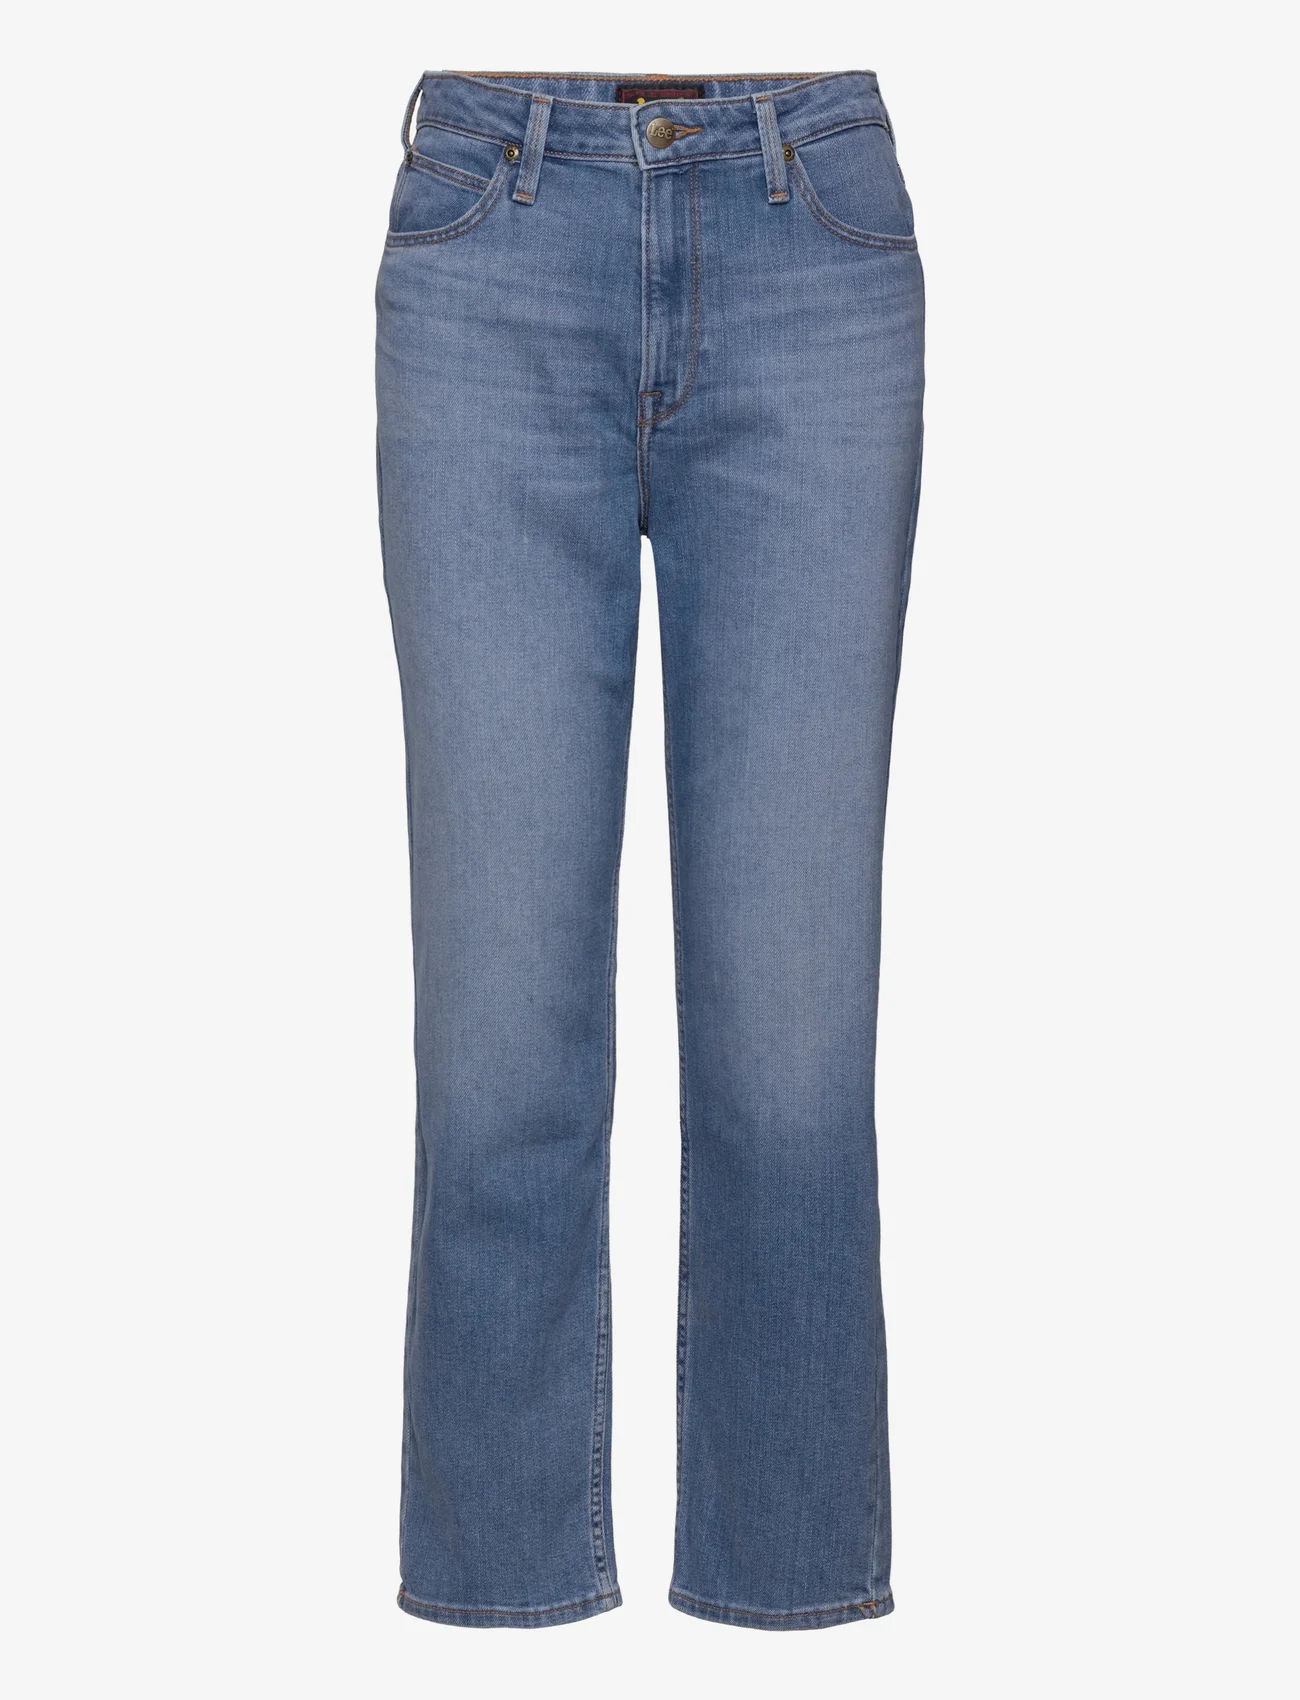 Lee Jeans - CAROL - raka jeans - fresh mid worn in - 0